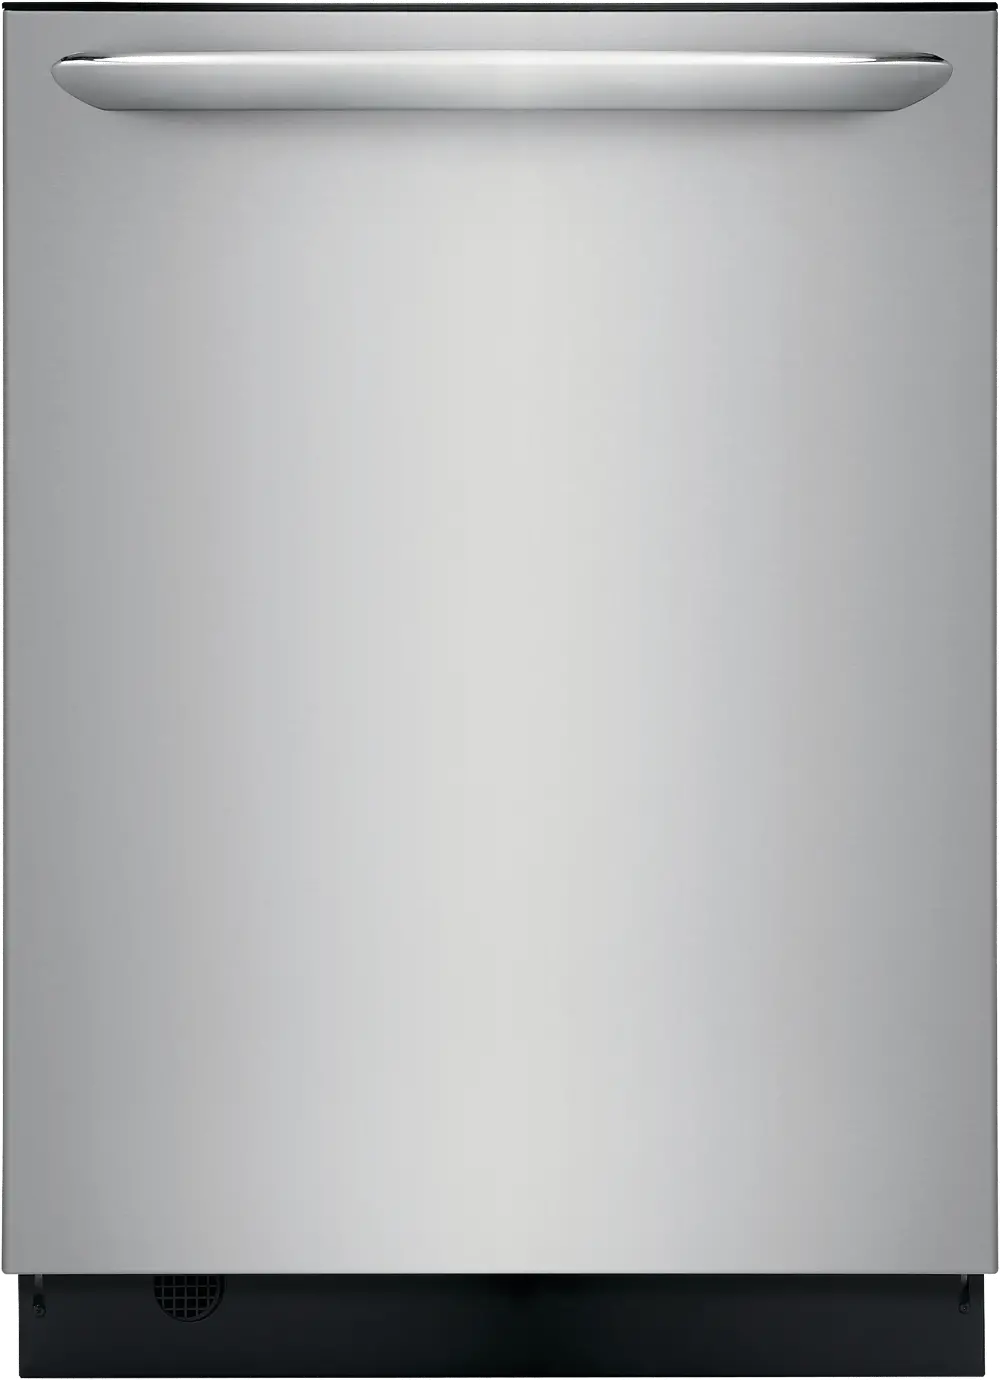 FGID2468UF Frigidaire Gallery Top Control Dishwasher - Stainless Steel-1